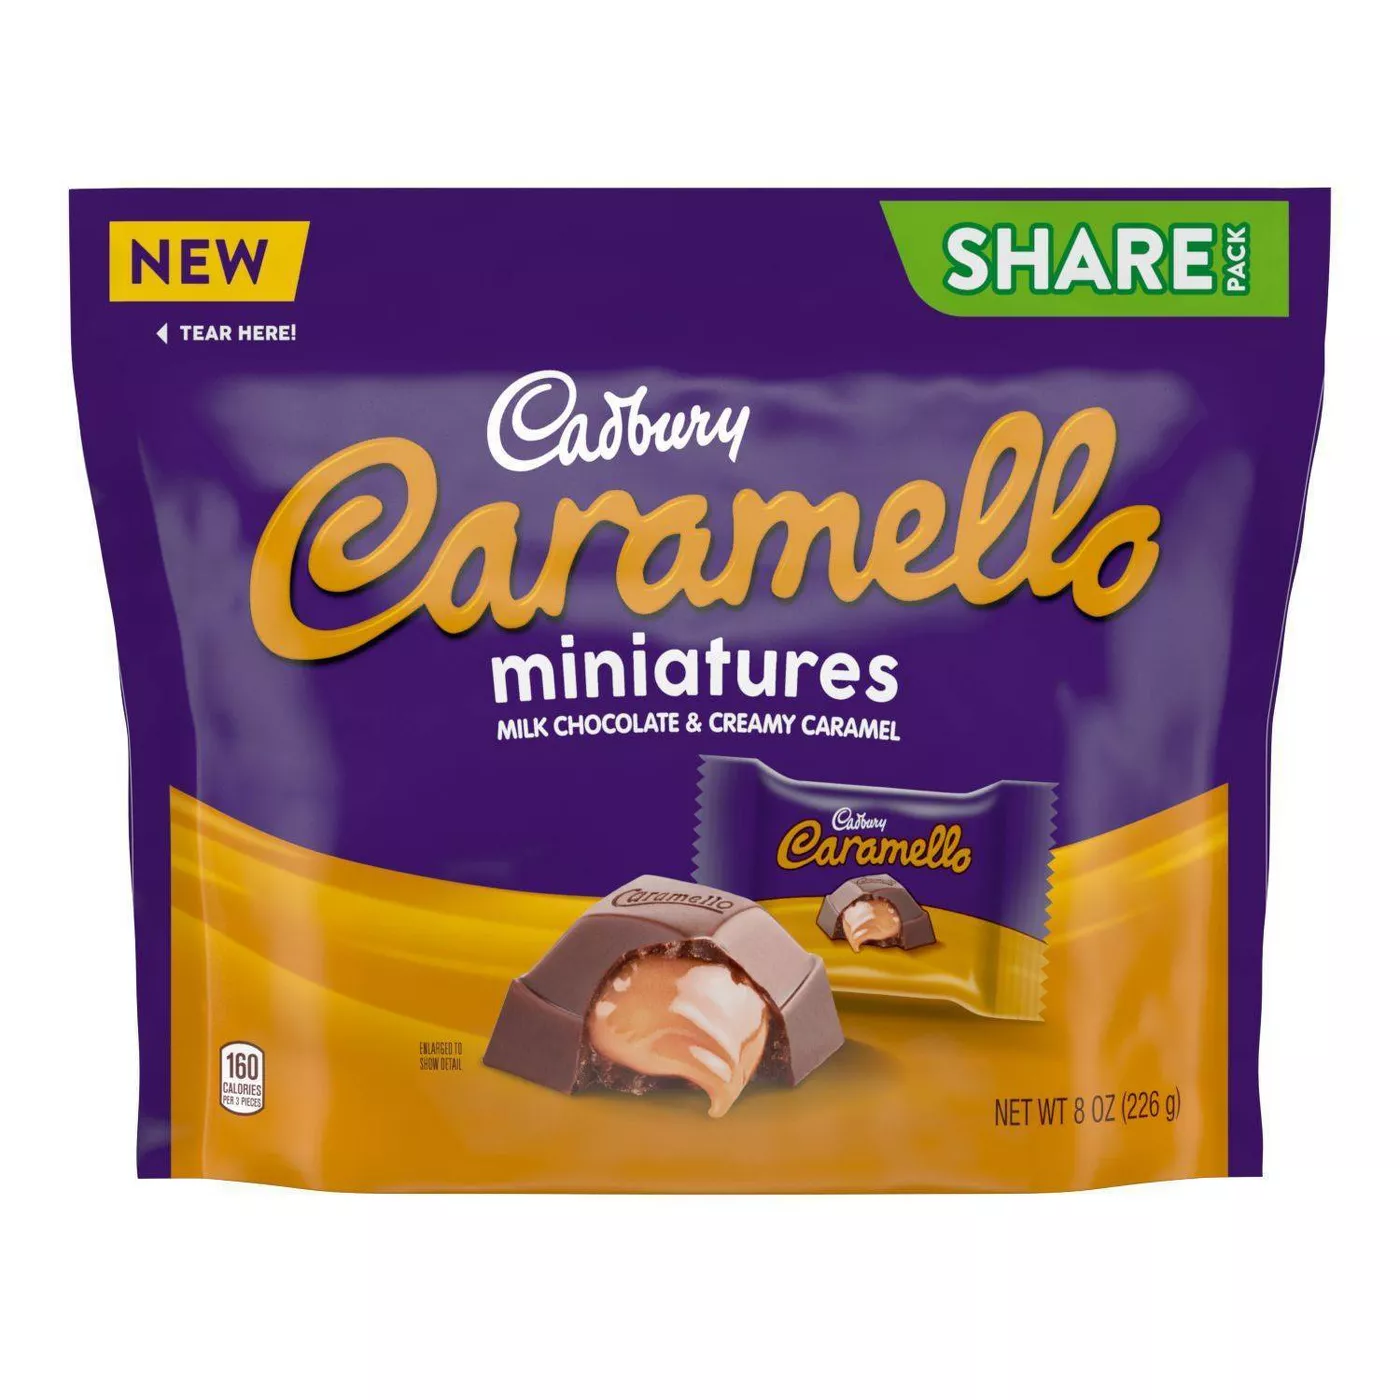 Hershey's Cadbury Caramello Share Size Bag - 8oz - image 1 of 7